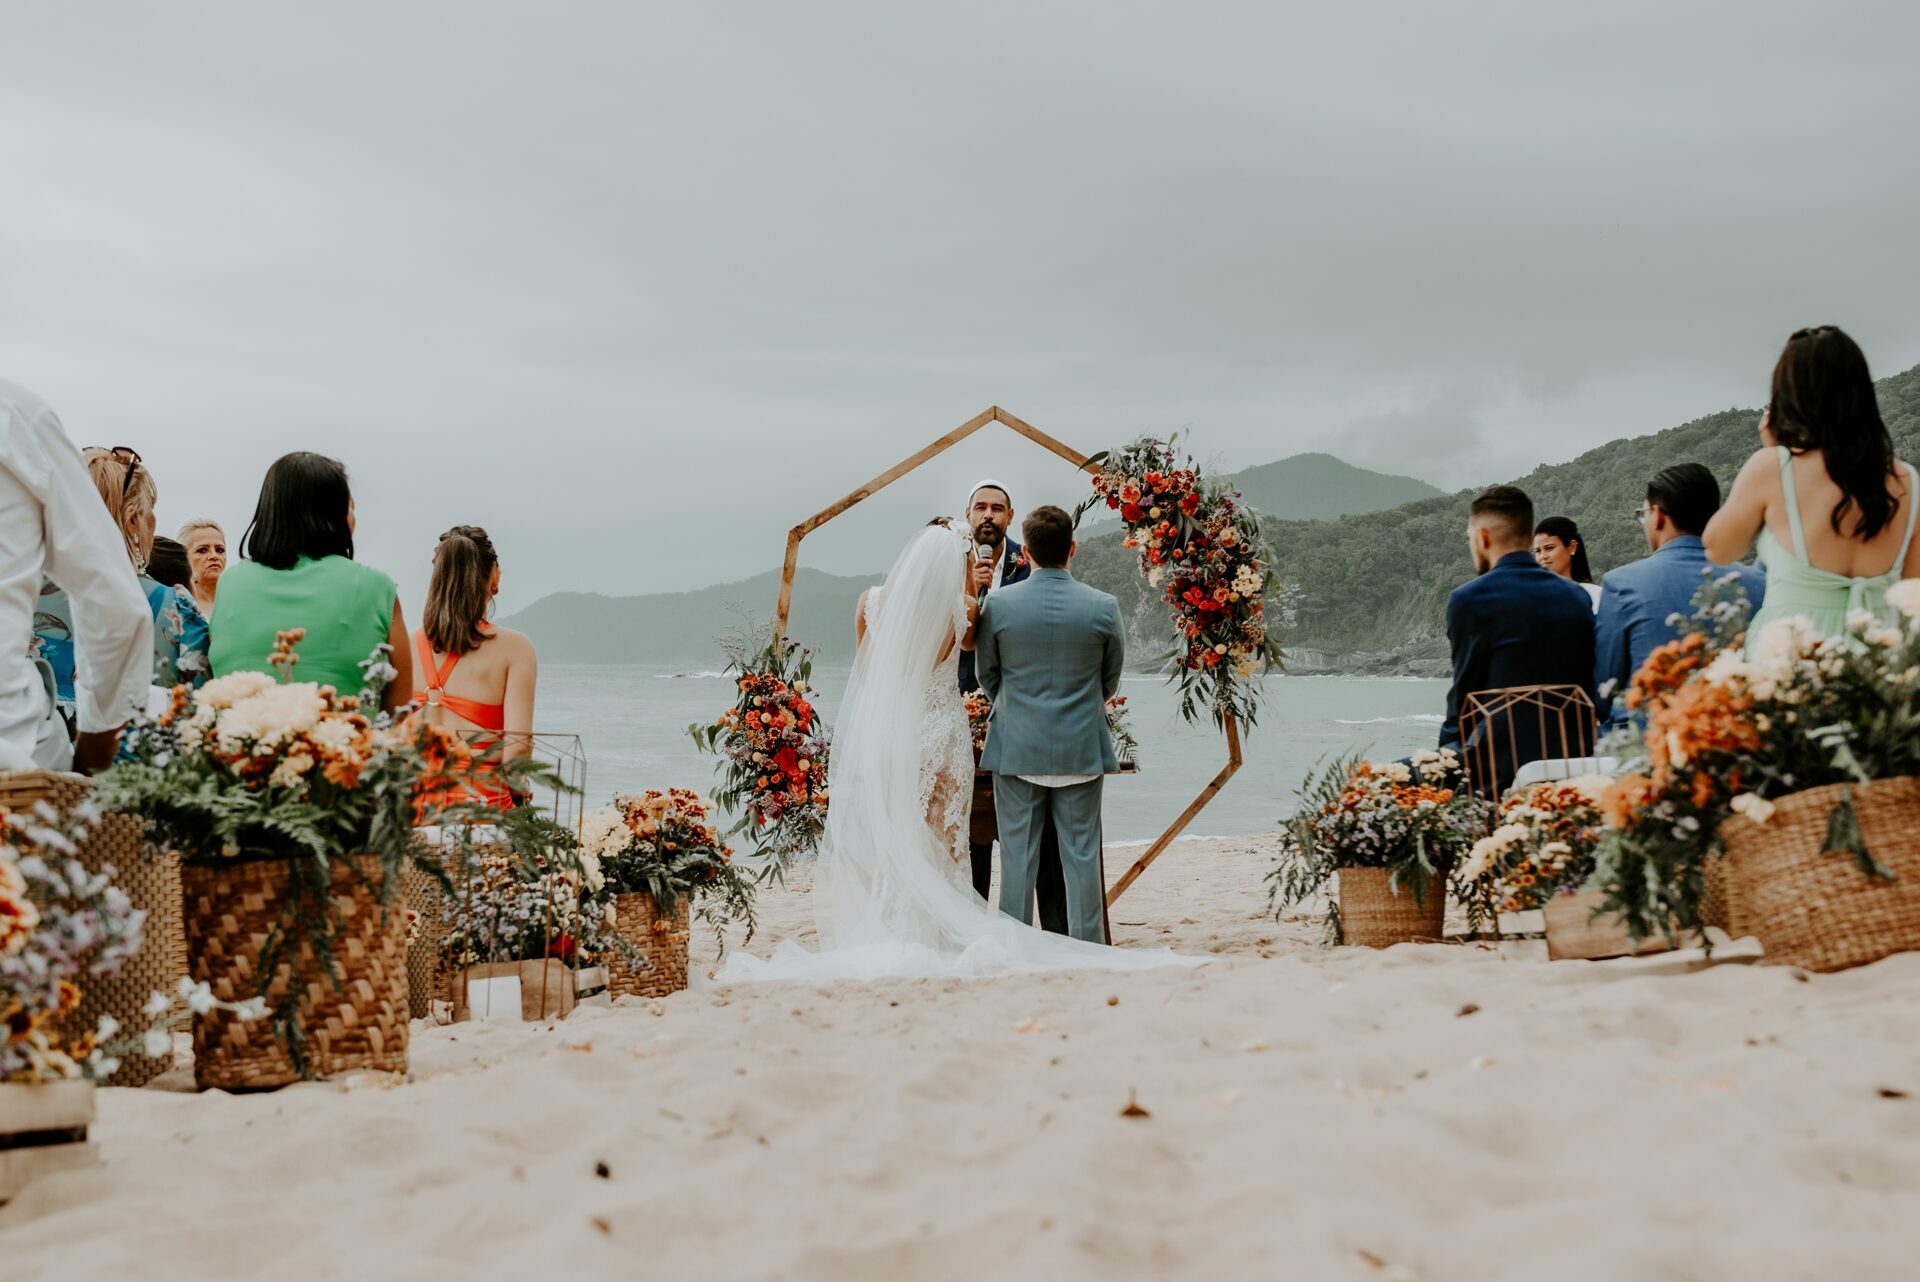 Alexia e Guilherme | Casamento vibrante na praia, por Stéfanie Belo